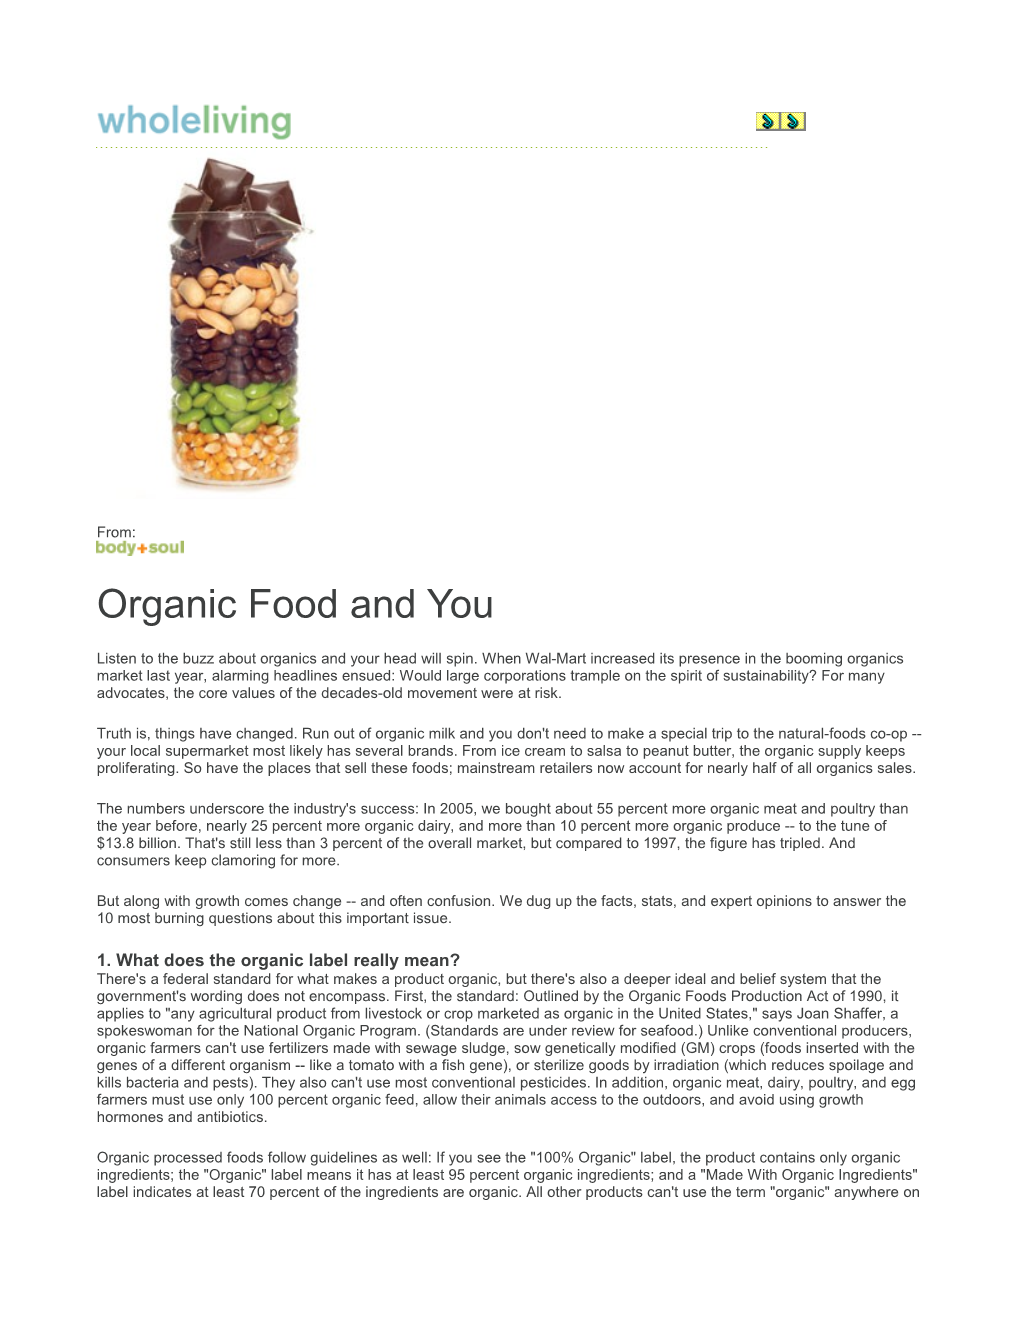 Organic Food and You